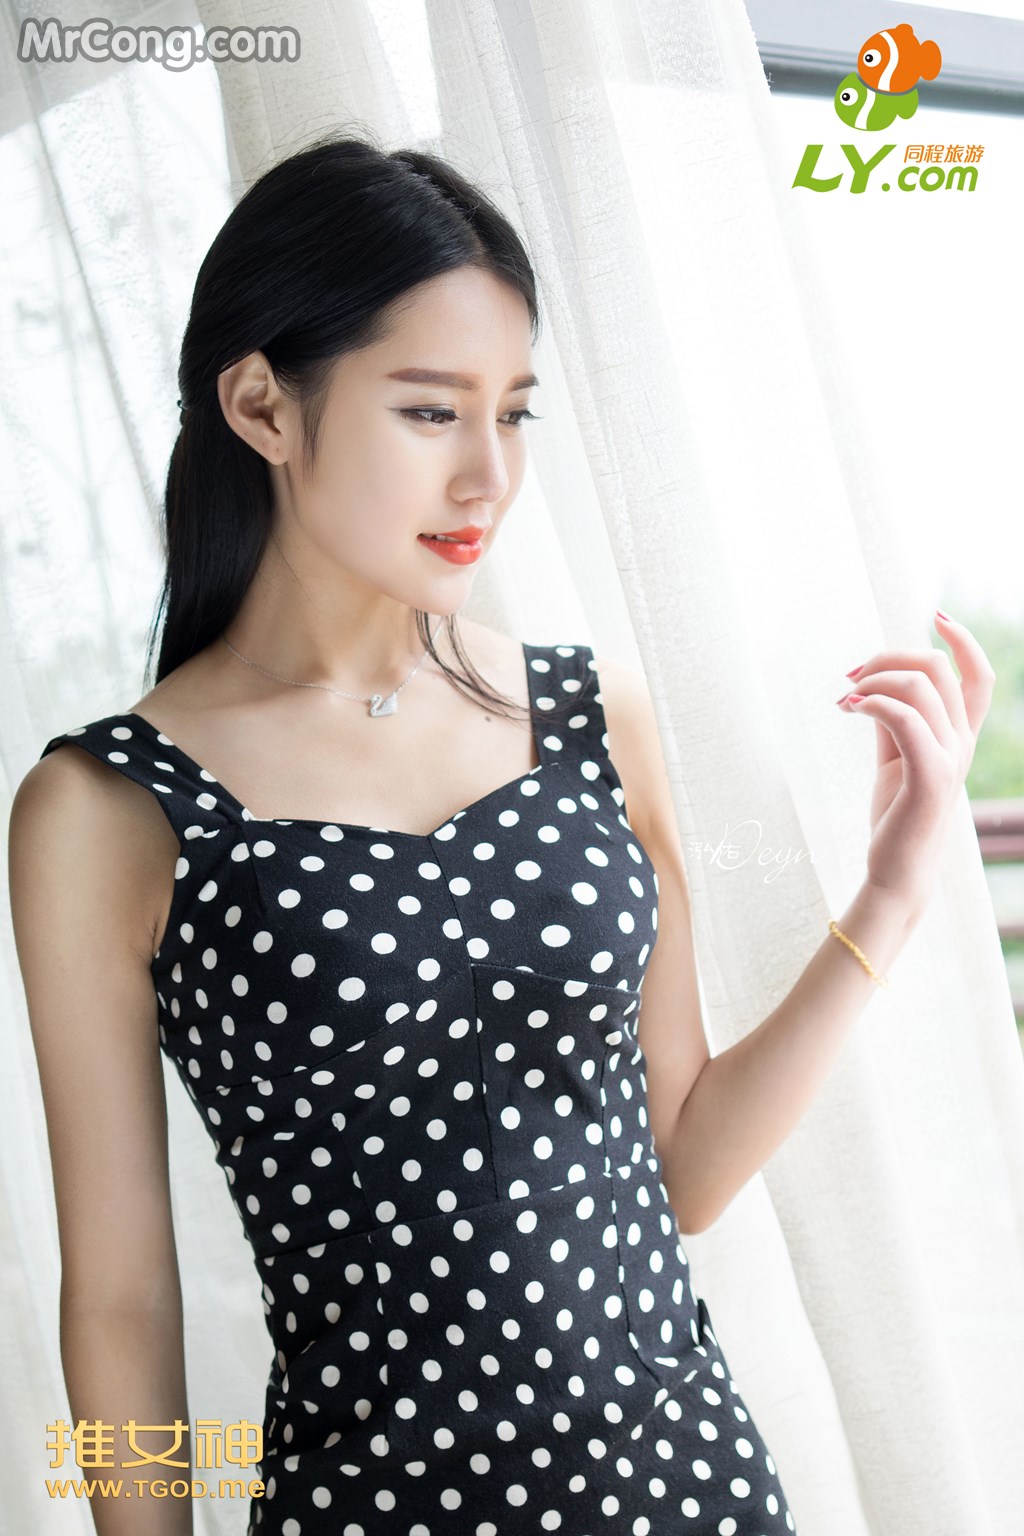 TGOD 2014-09-24: Model Xu Yan Xin (徐妍馨) (66 pictures) photo 1-5